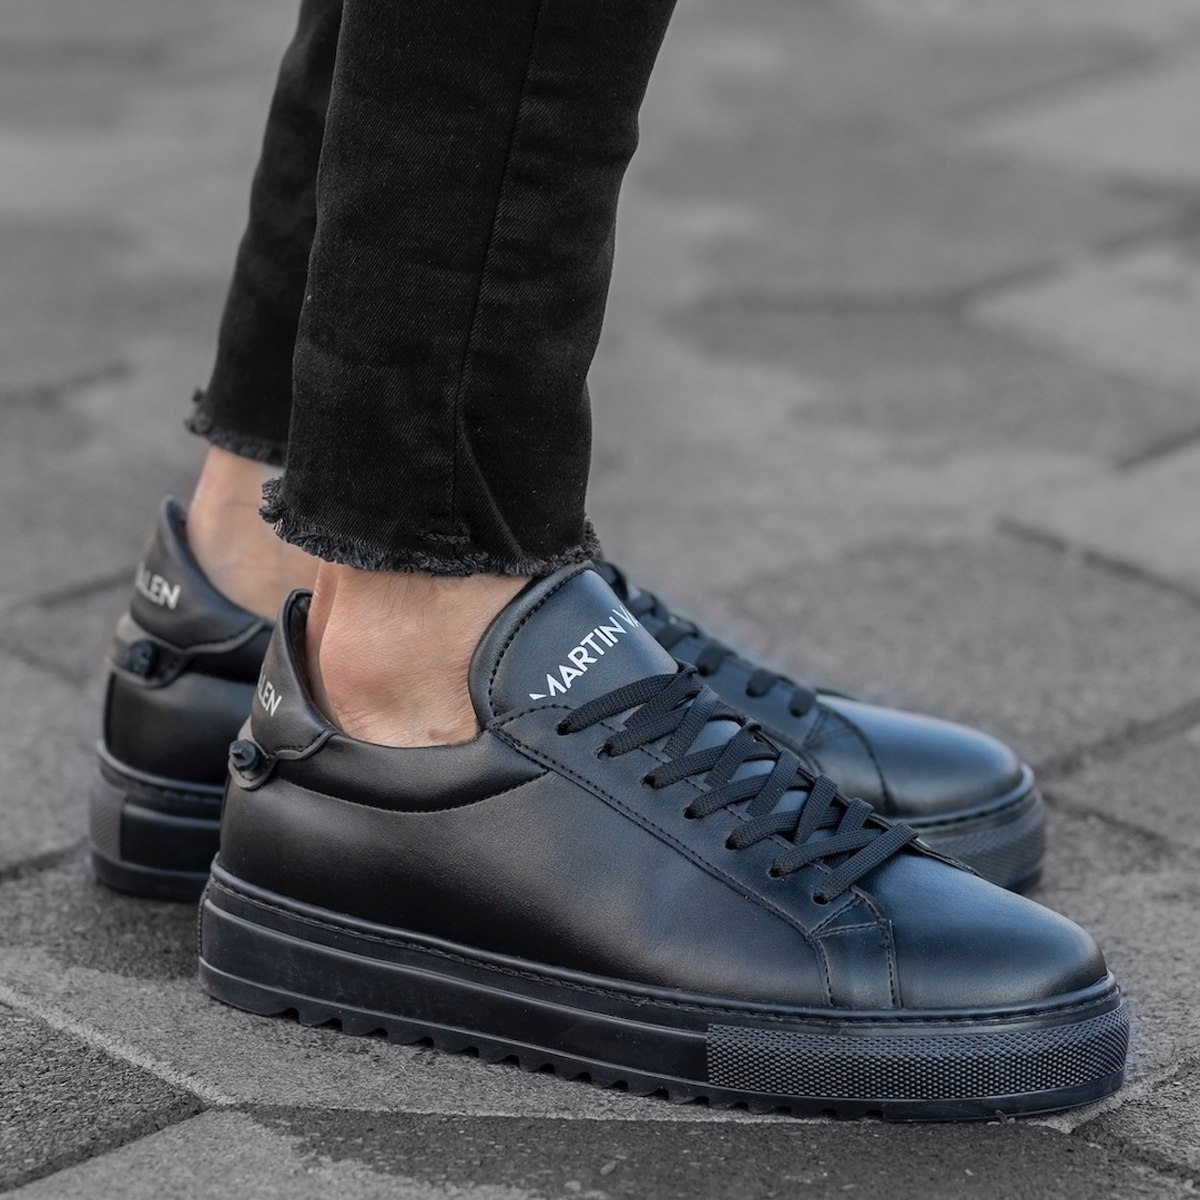 Men’s Low Top Sneakers Shoes Black